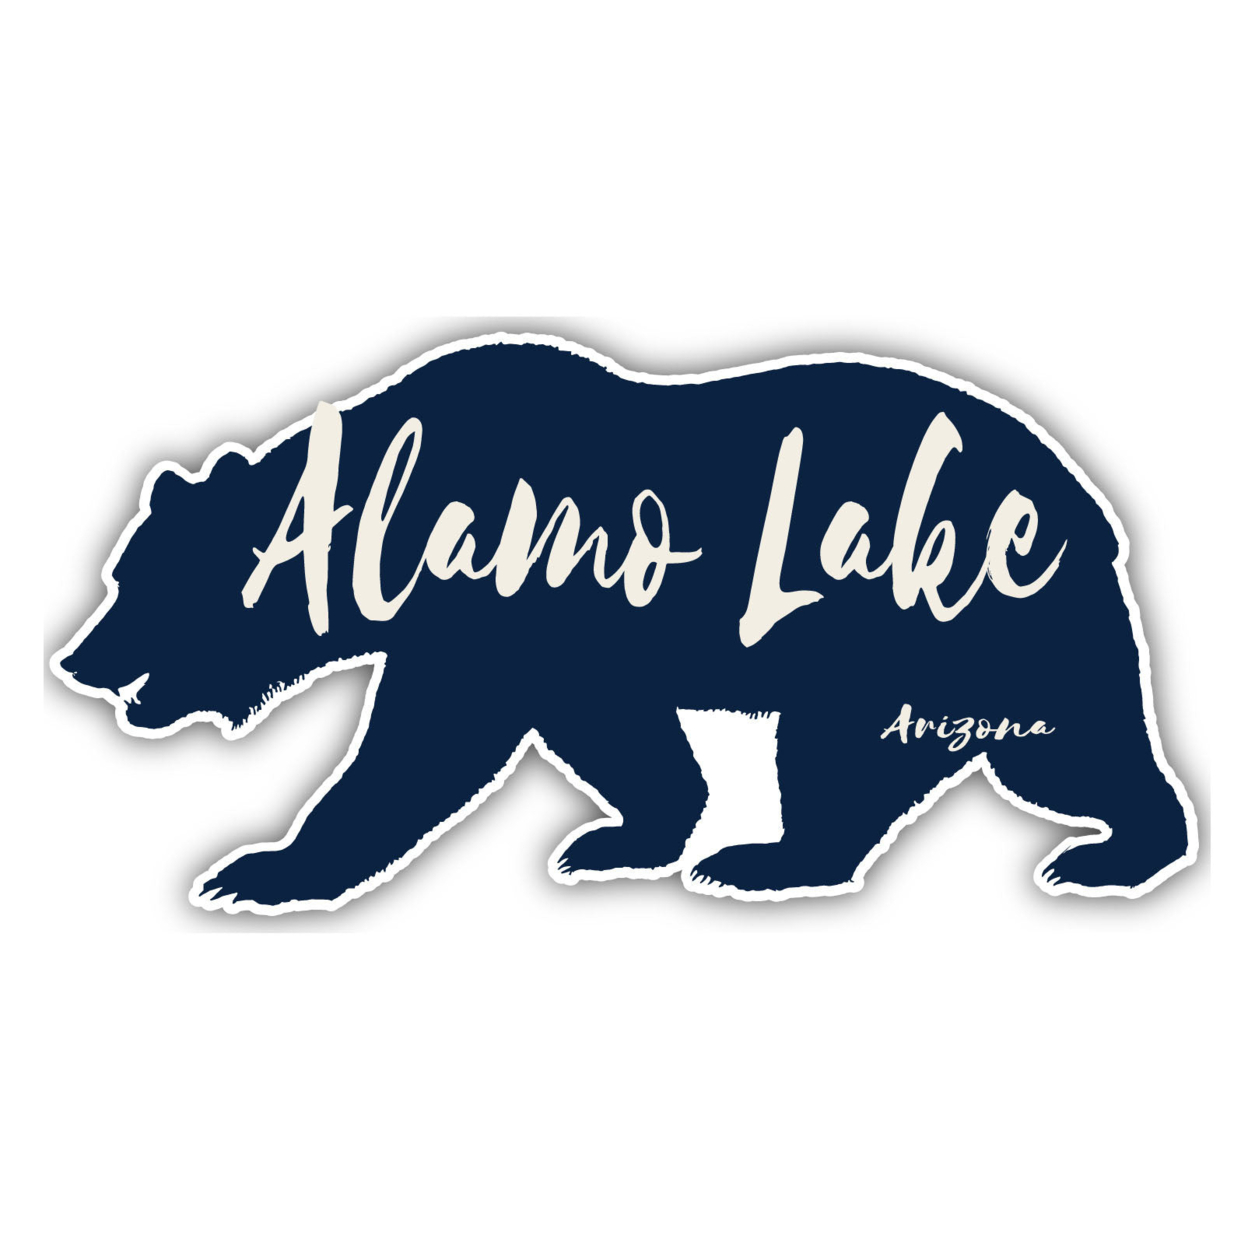 Alamo Lake Arizona Souvenir Decorative Stickers (Choose Theme And Size) - Single Unit, 2-Inch, Camp Life